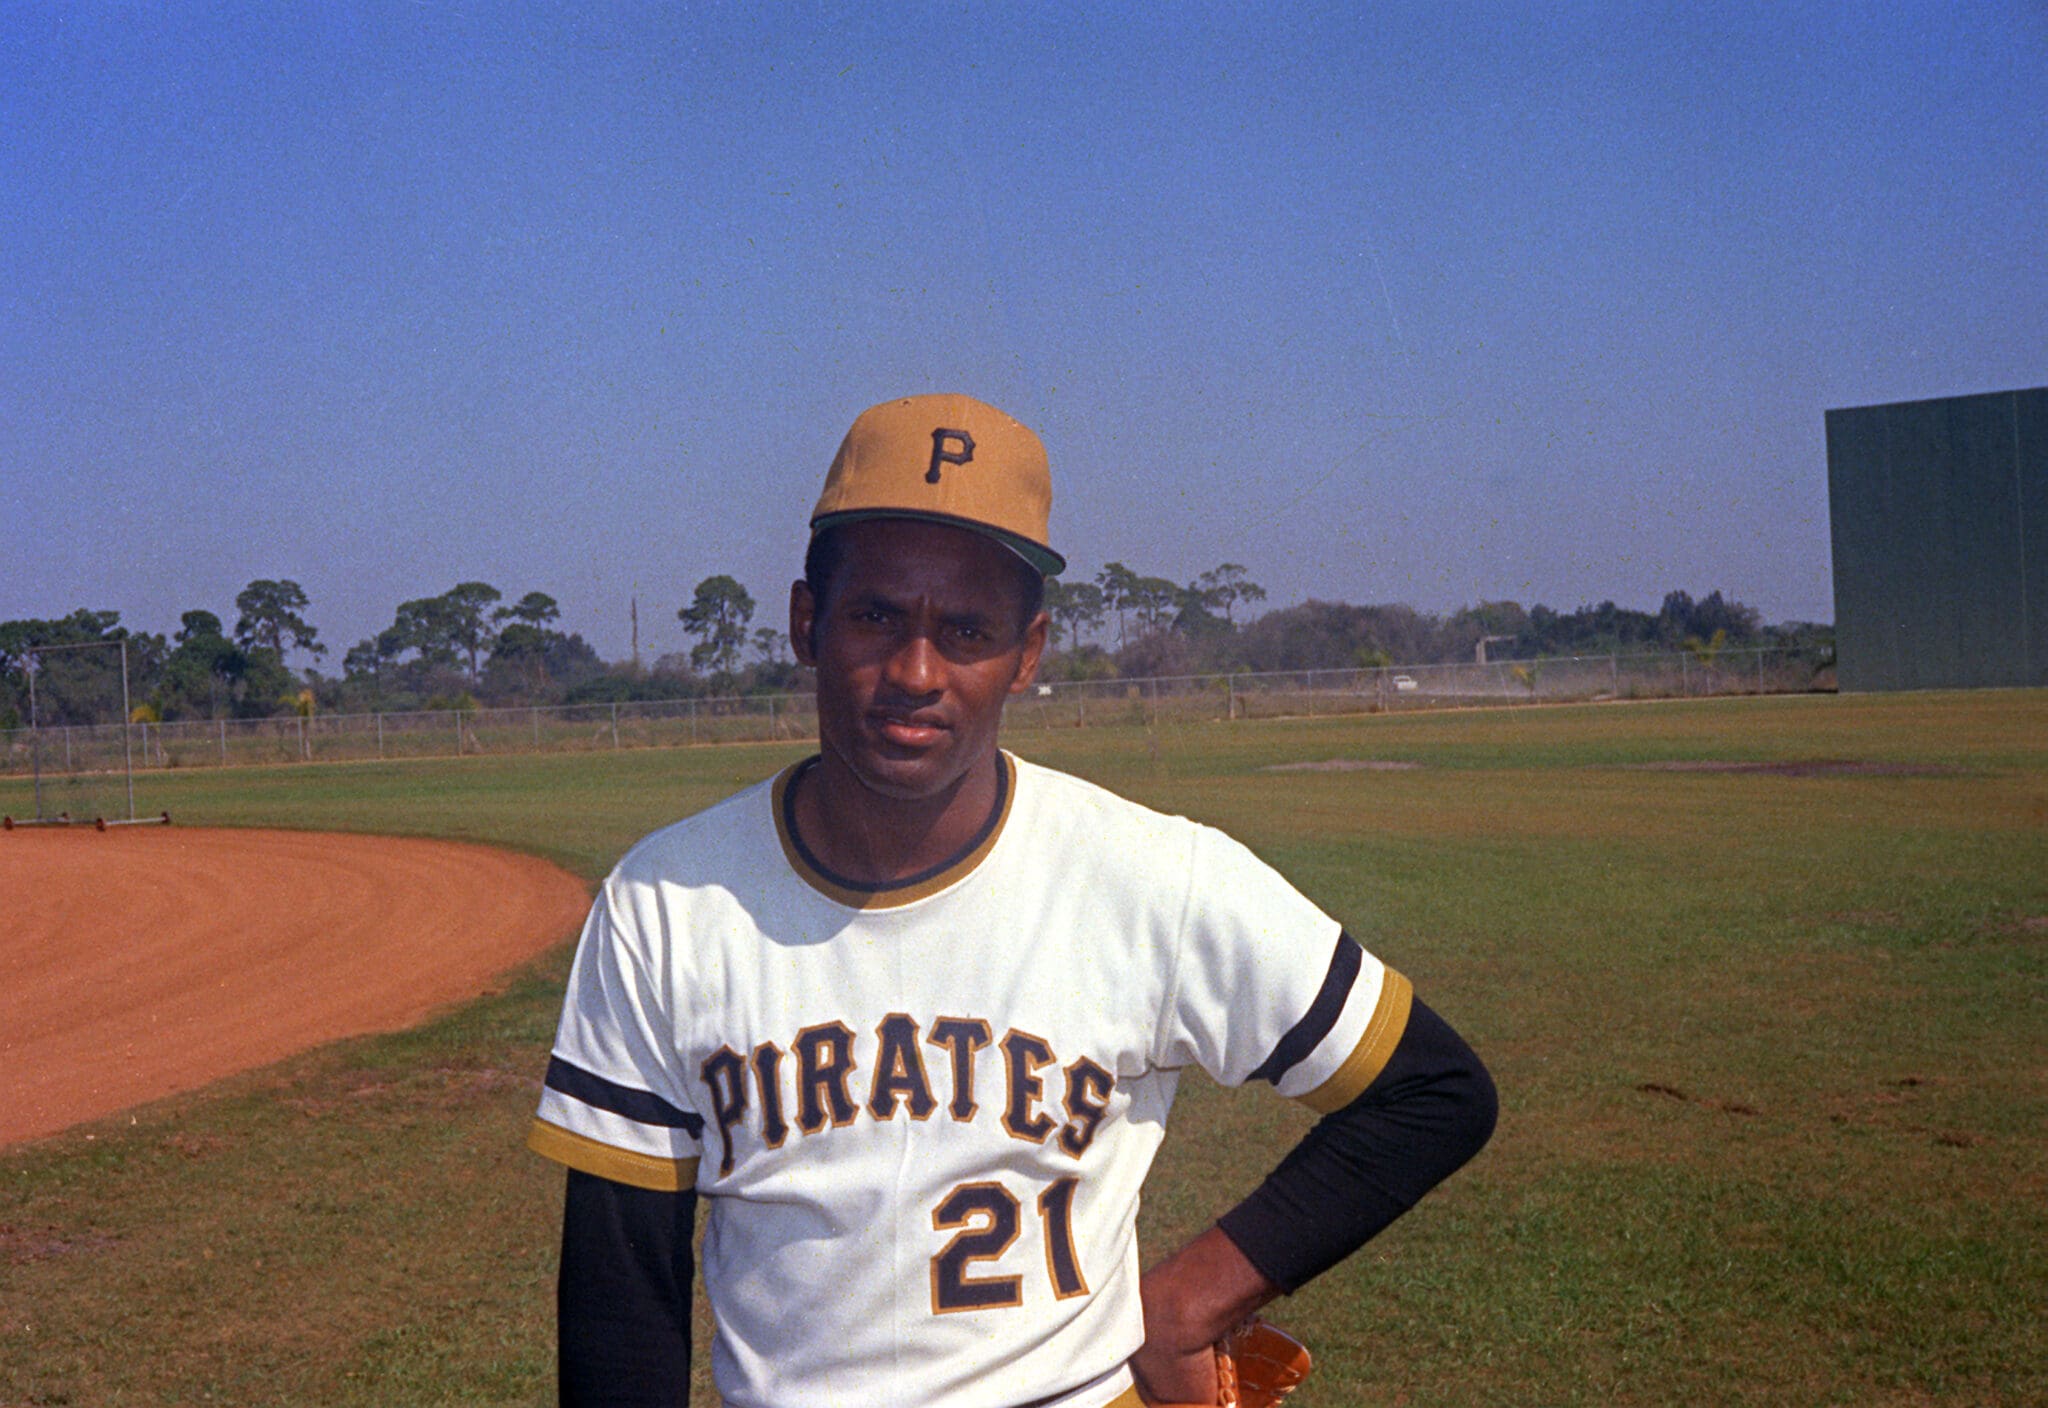 Roberto Clemente, Pittsburgh Pirates